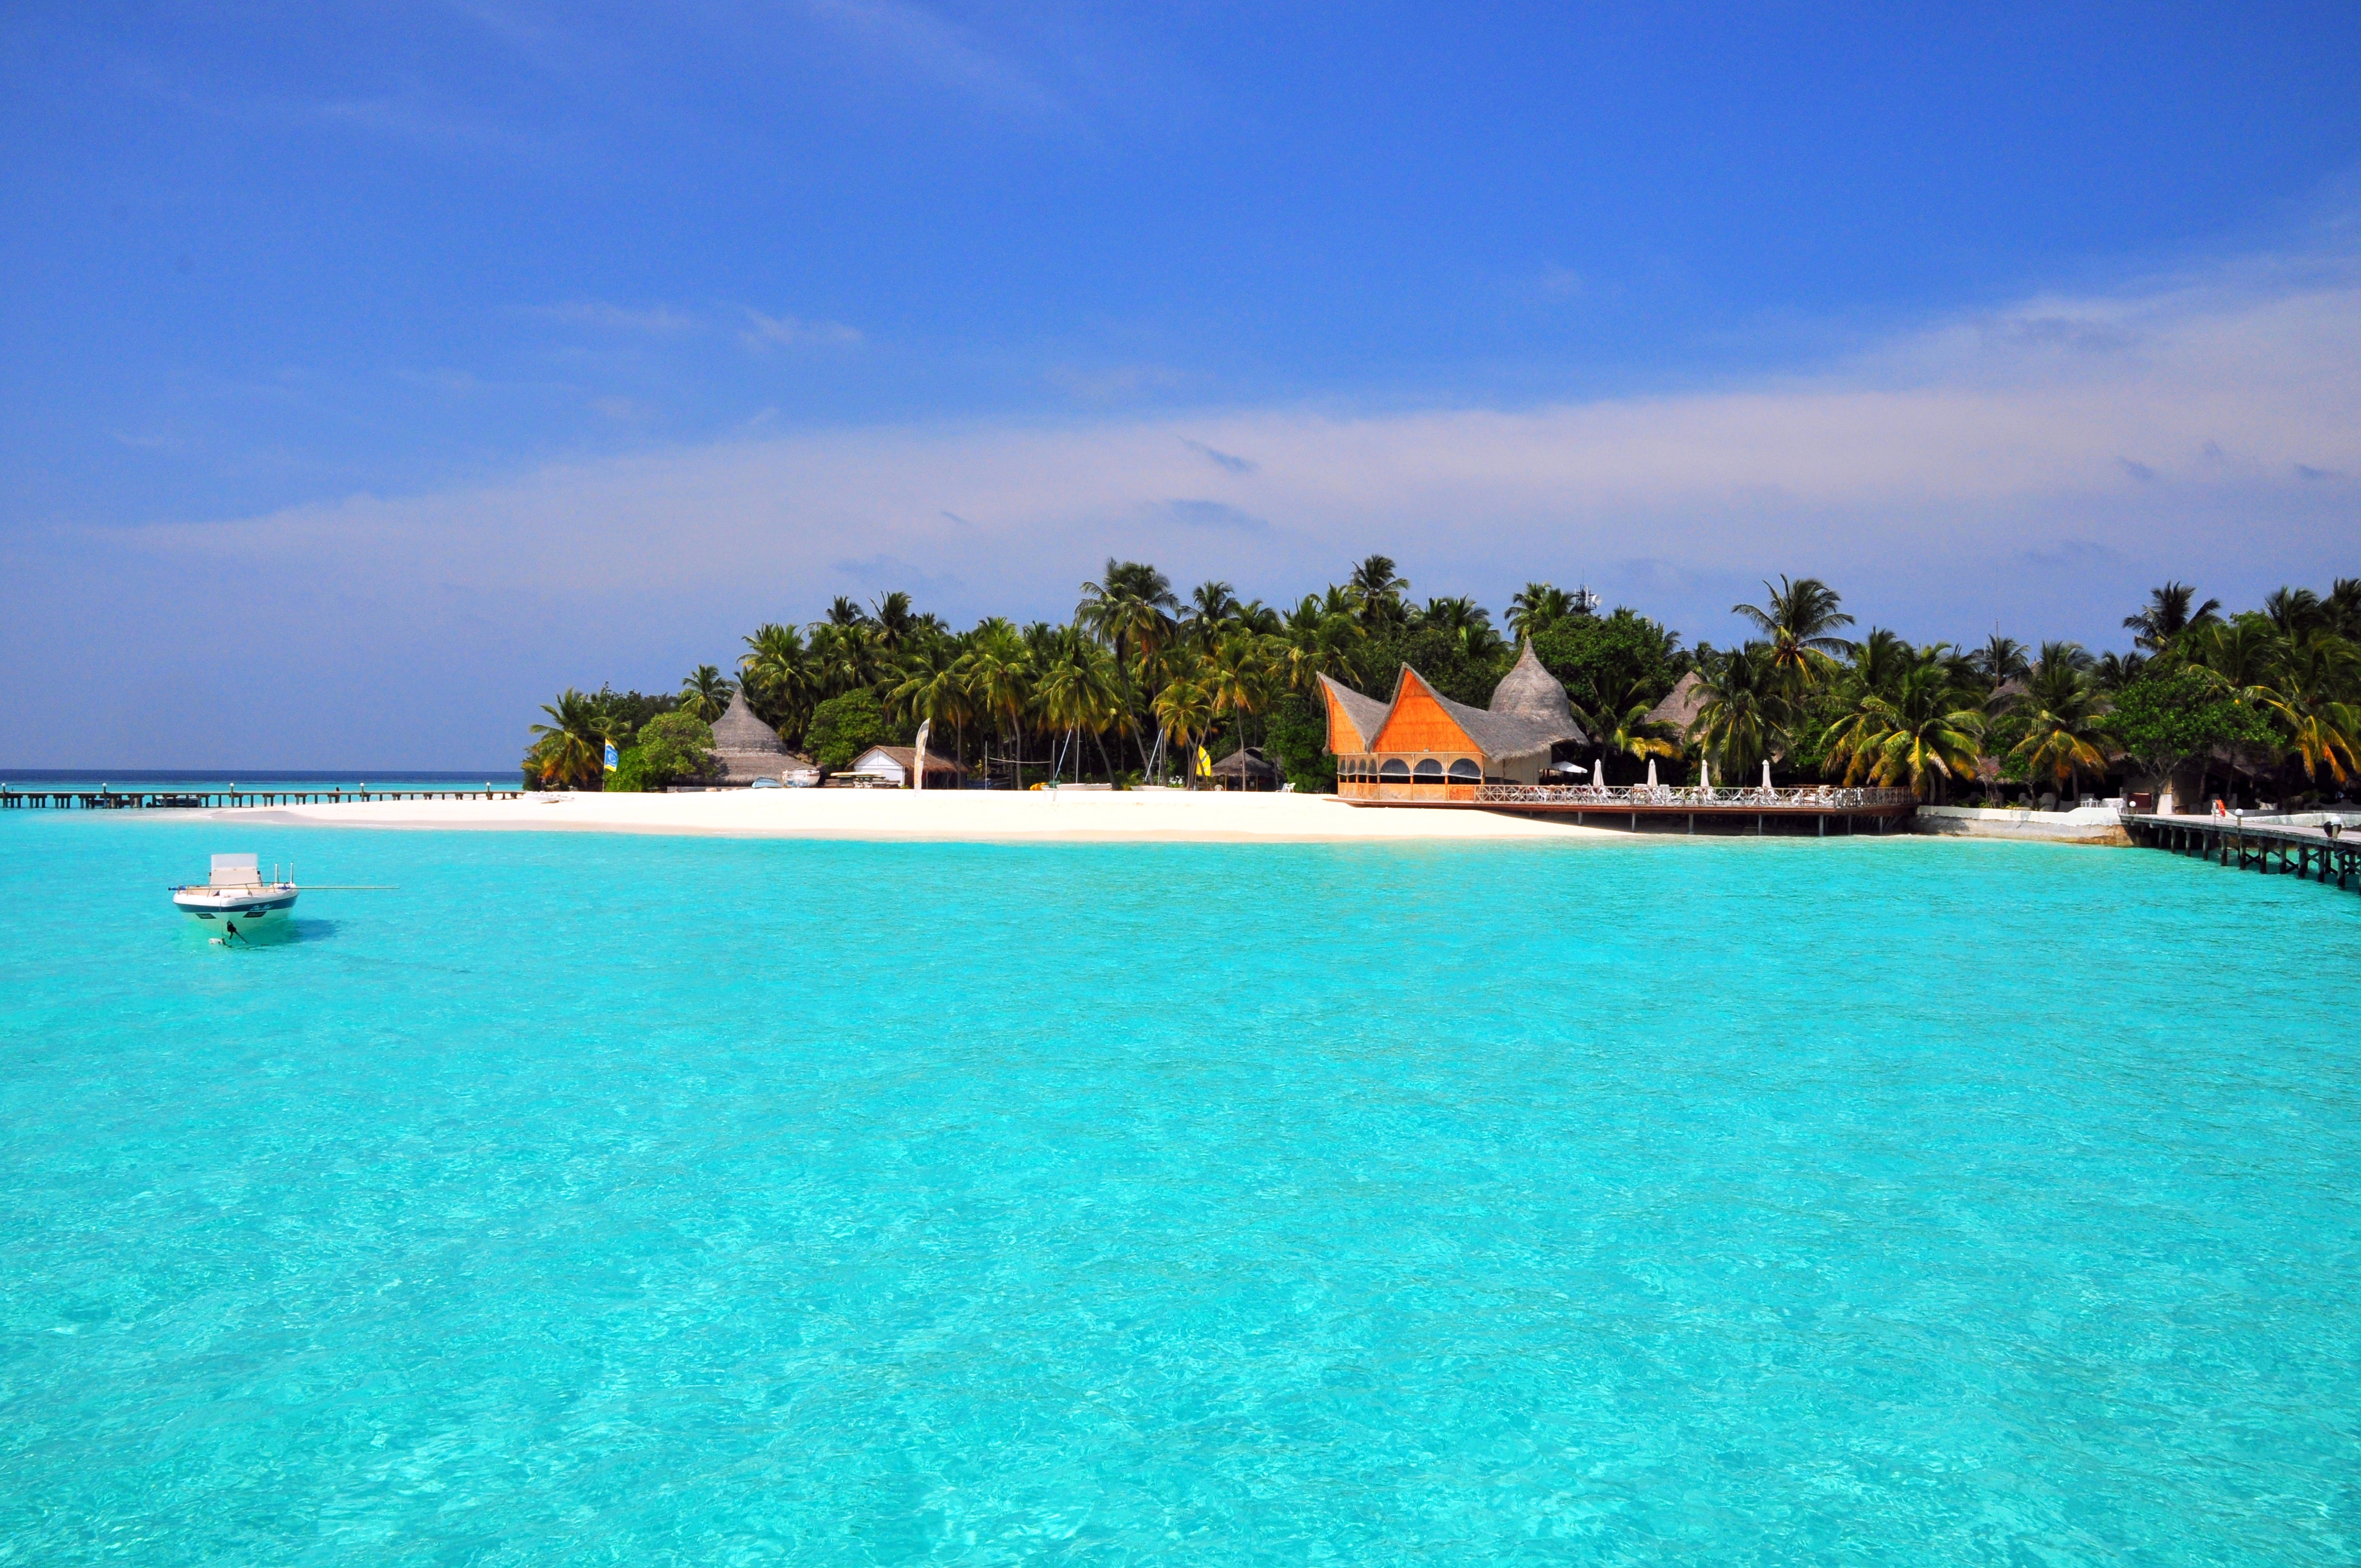 maldives, nature, beach, tropics, island